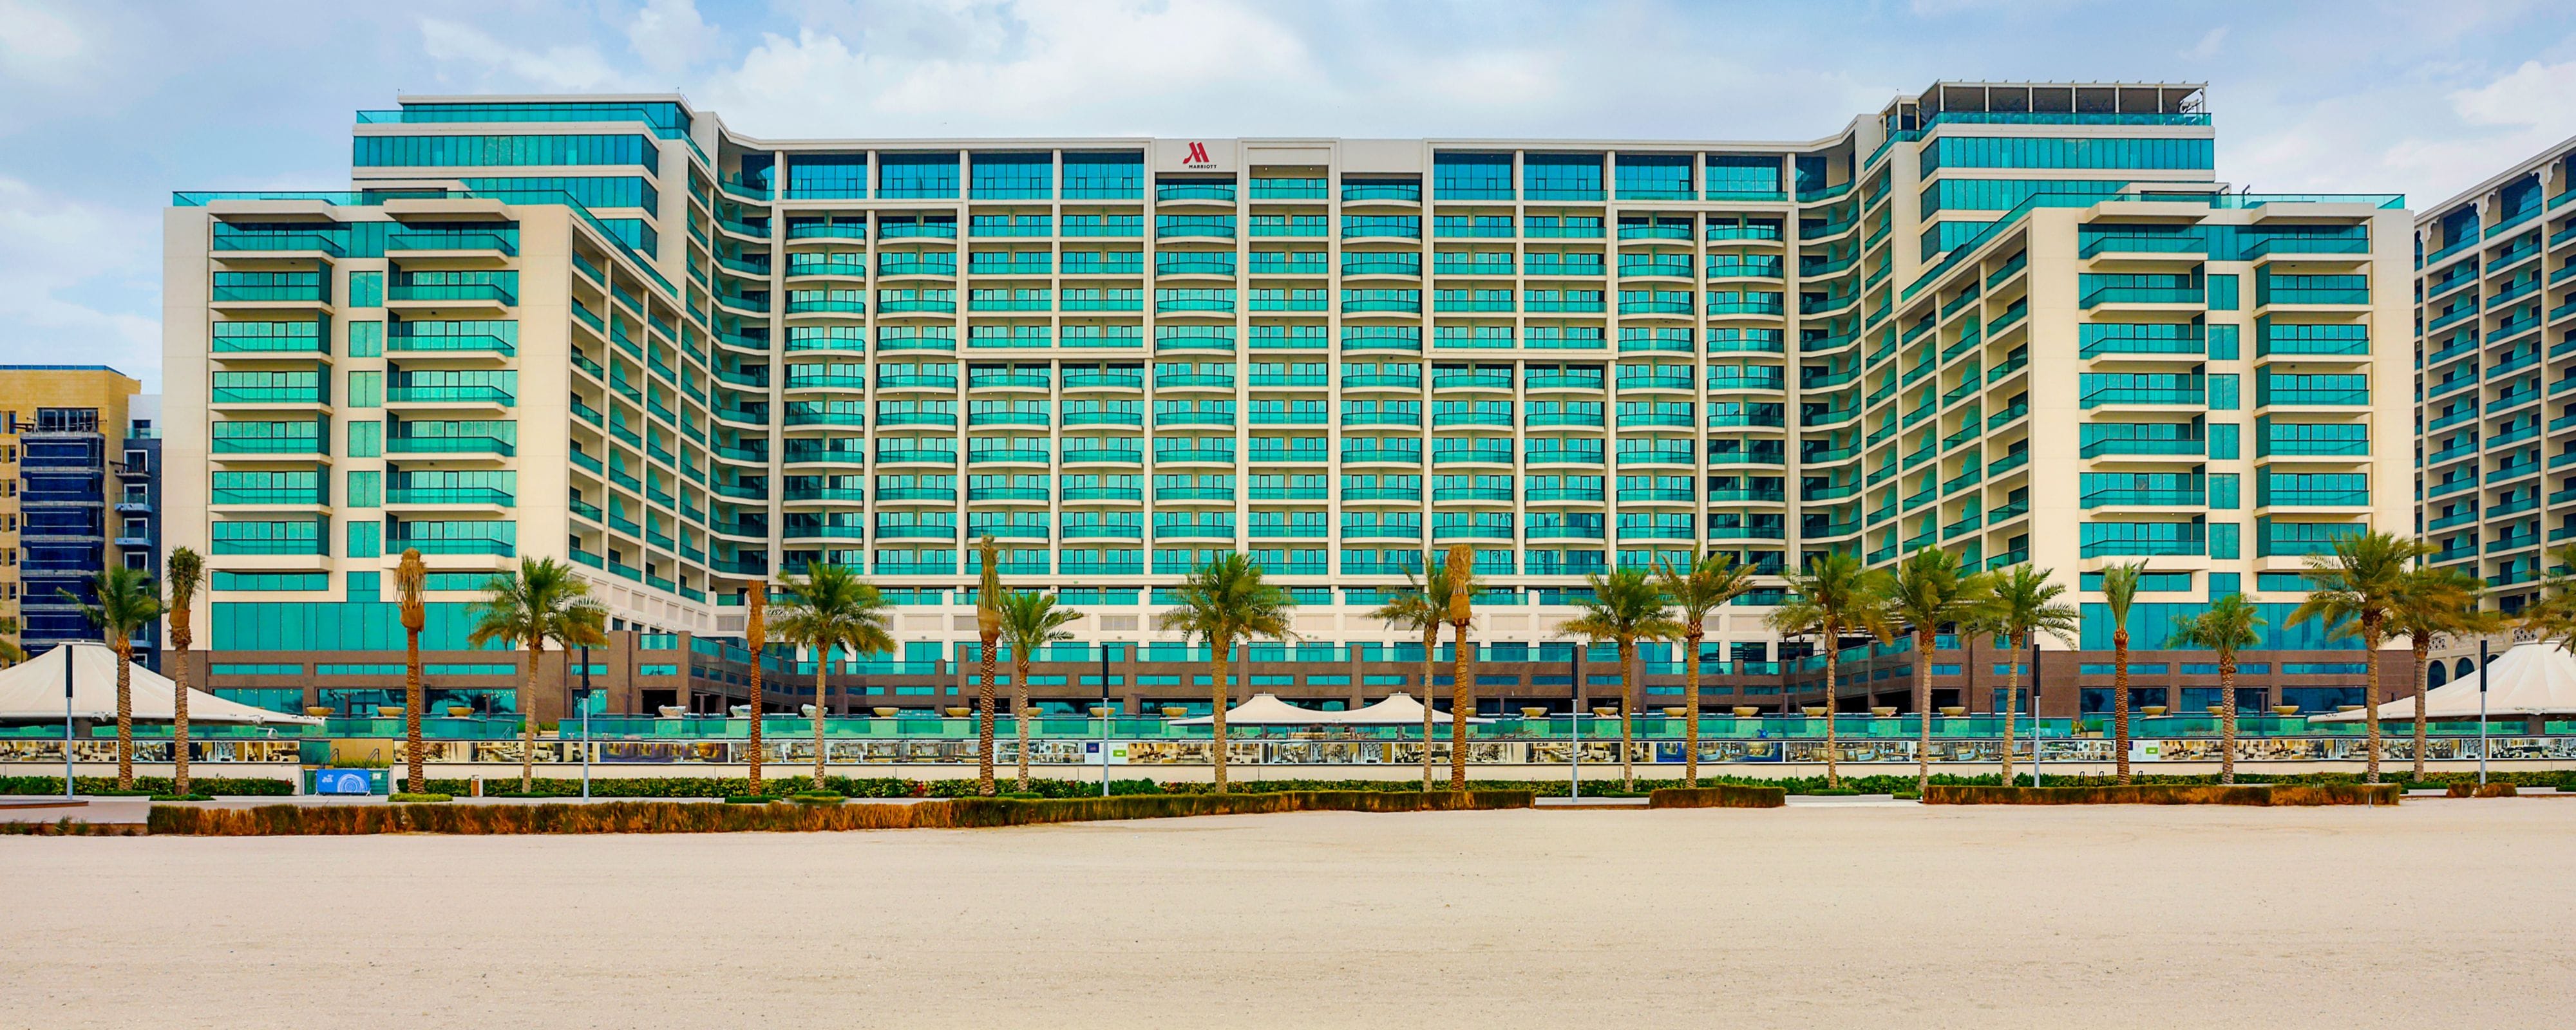 Hotel in Dubai | Marriott Resort Palm Jumeirah, Dubai